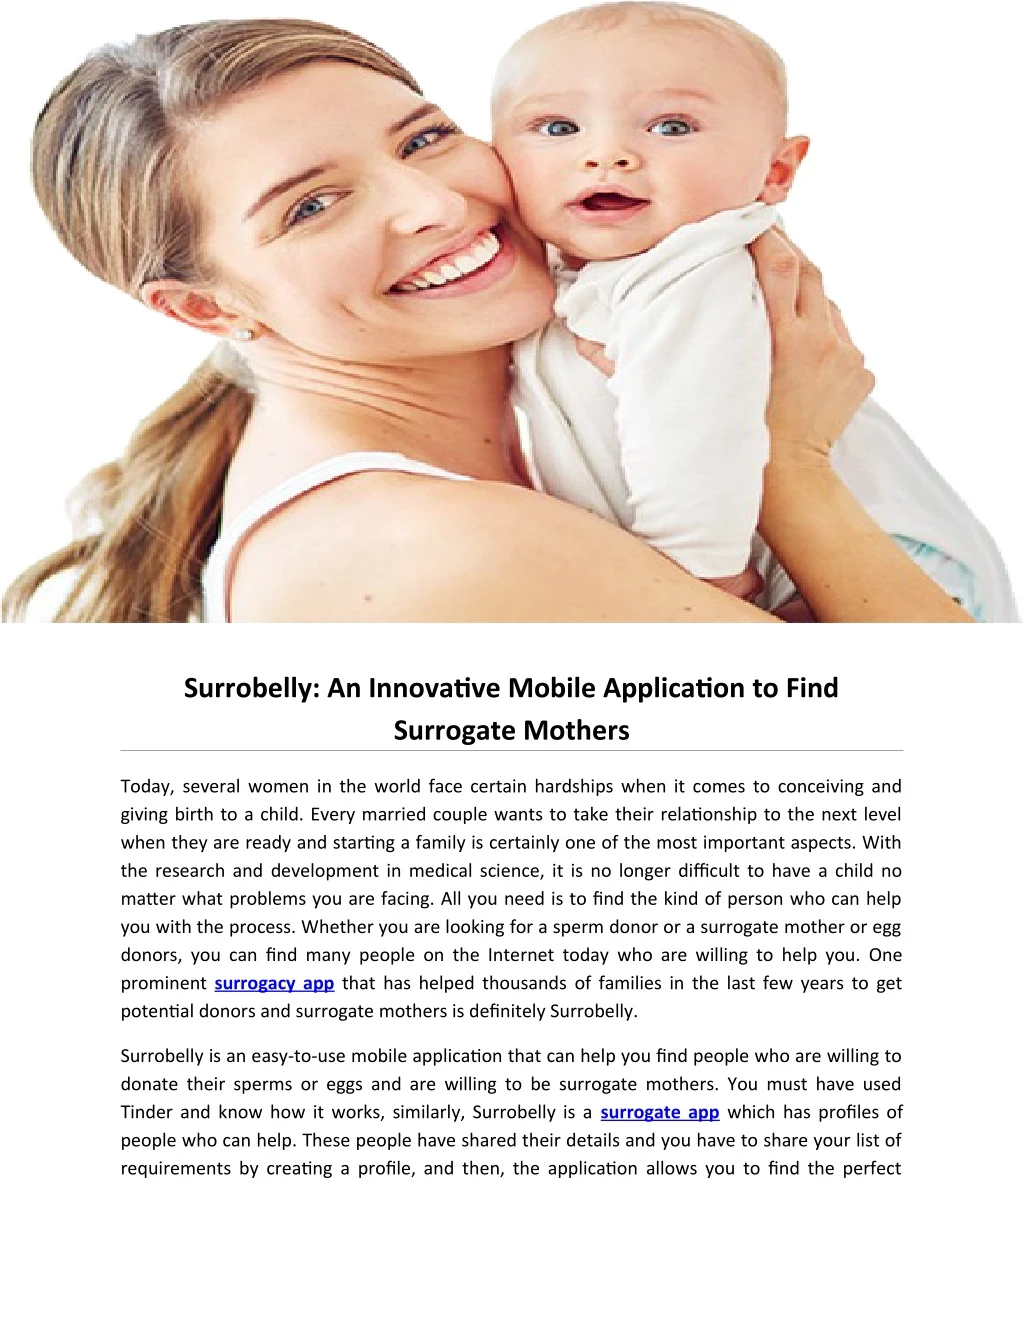 surrobelly an innovative mobile application